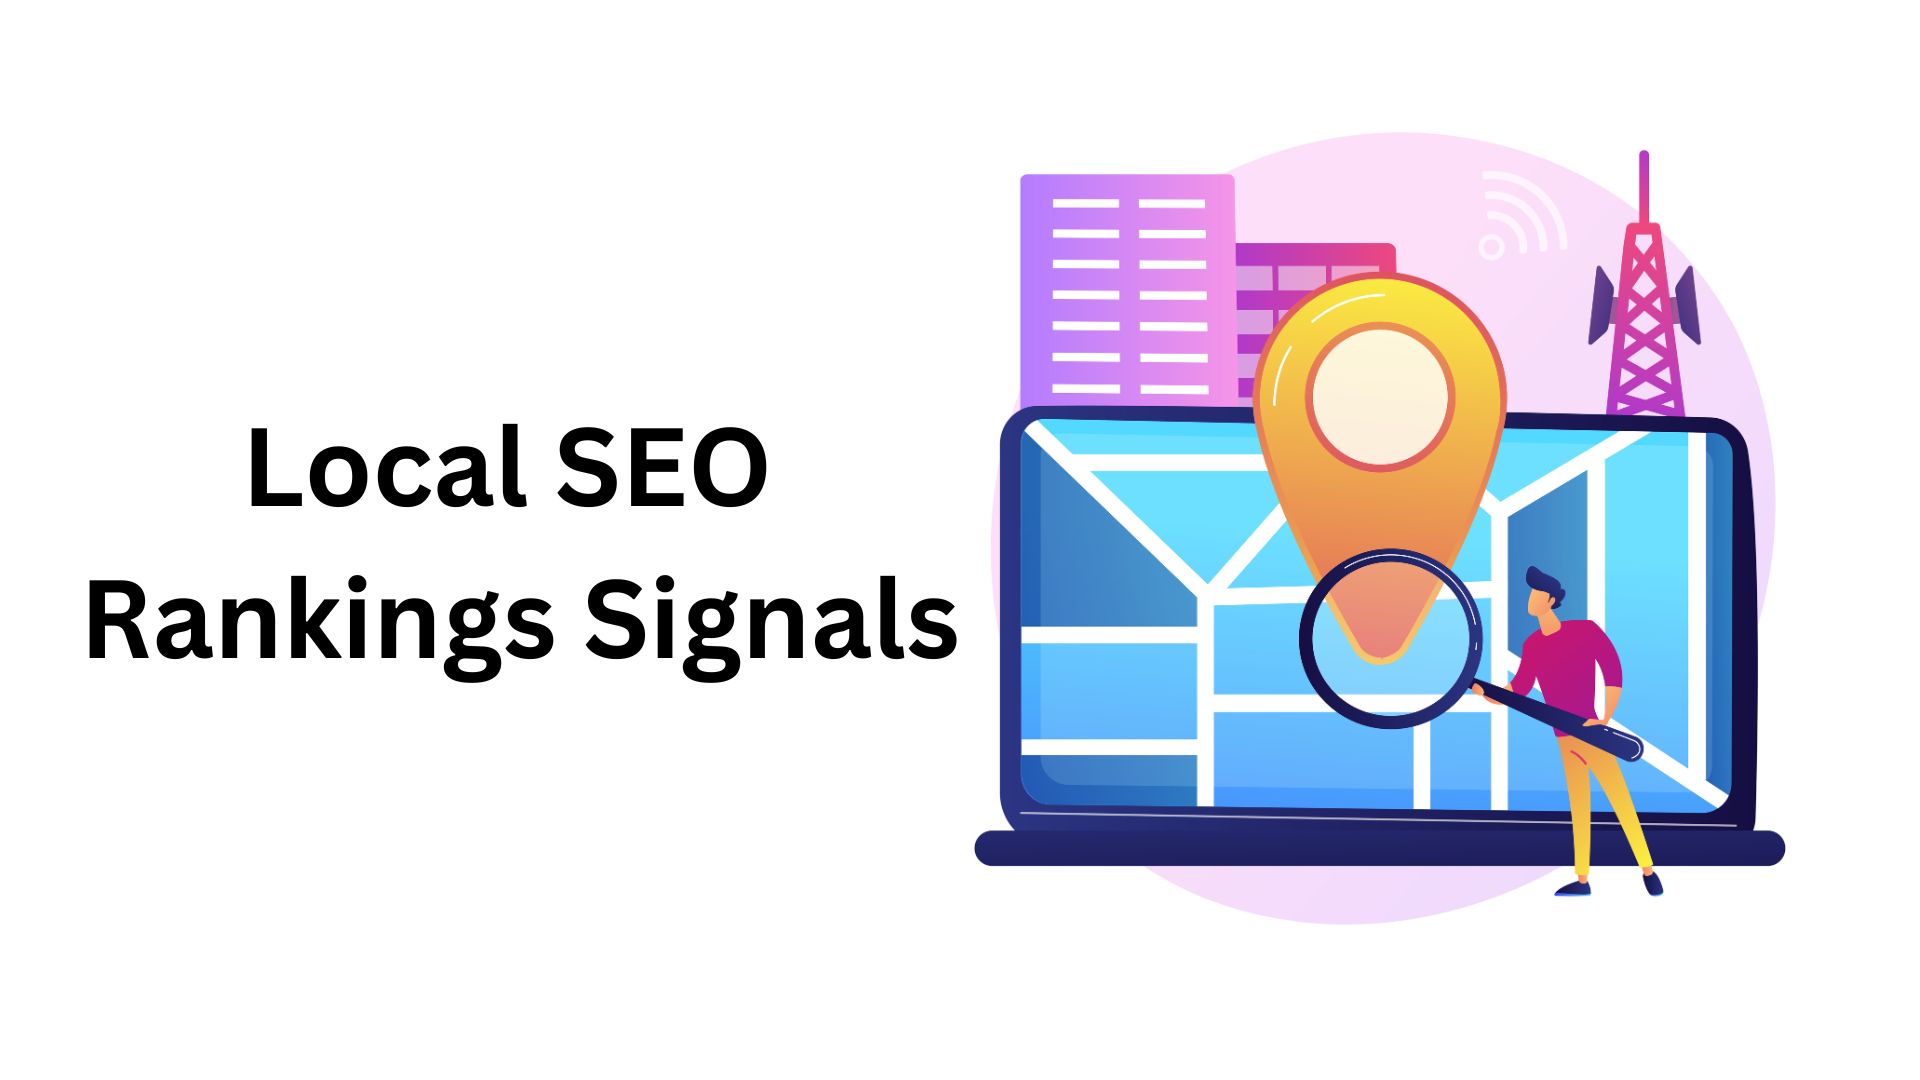 Local SEO Ranking Signals